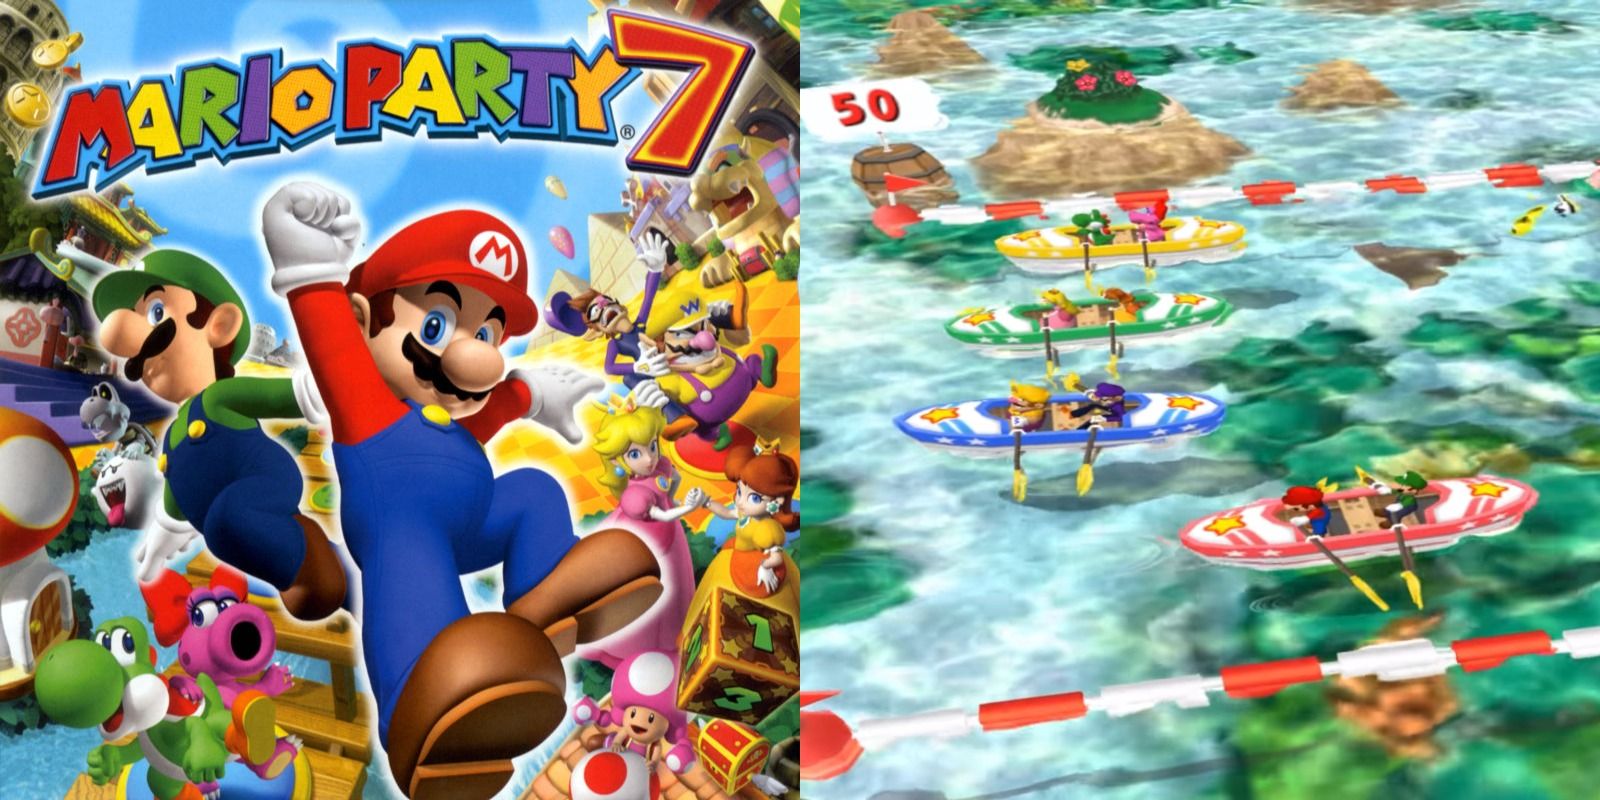 Mario Party 7 for the Nintendo GameCube